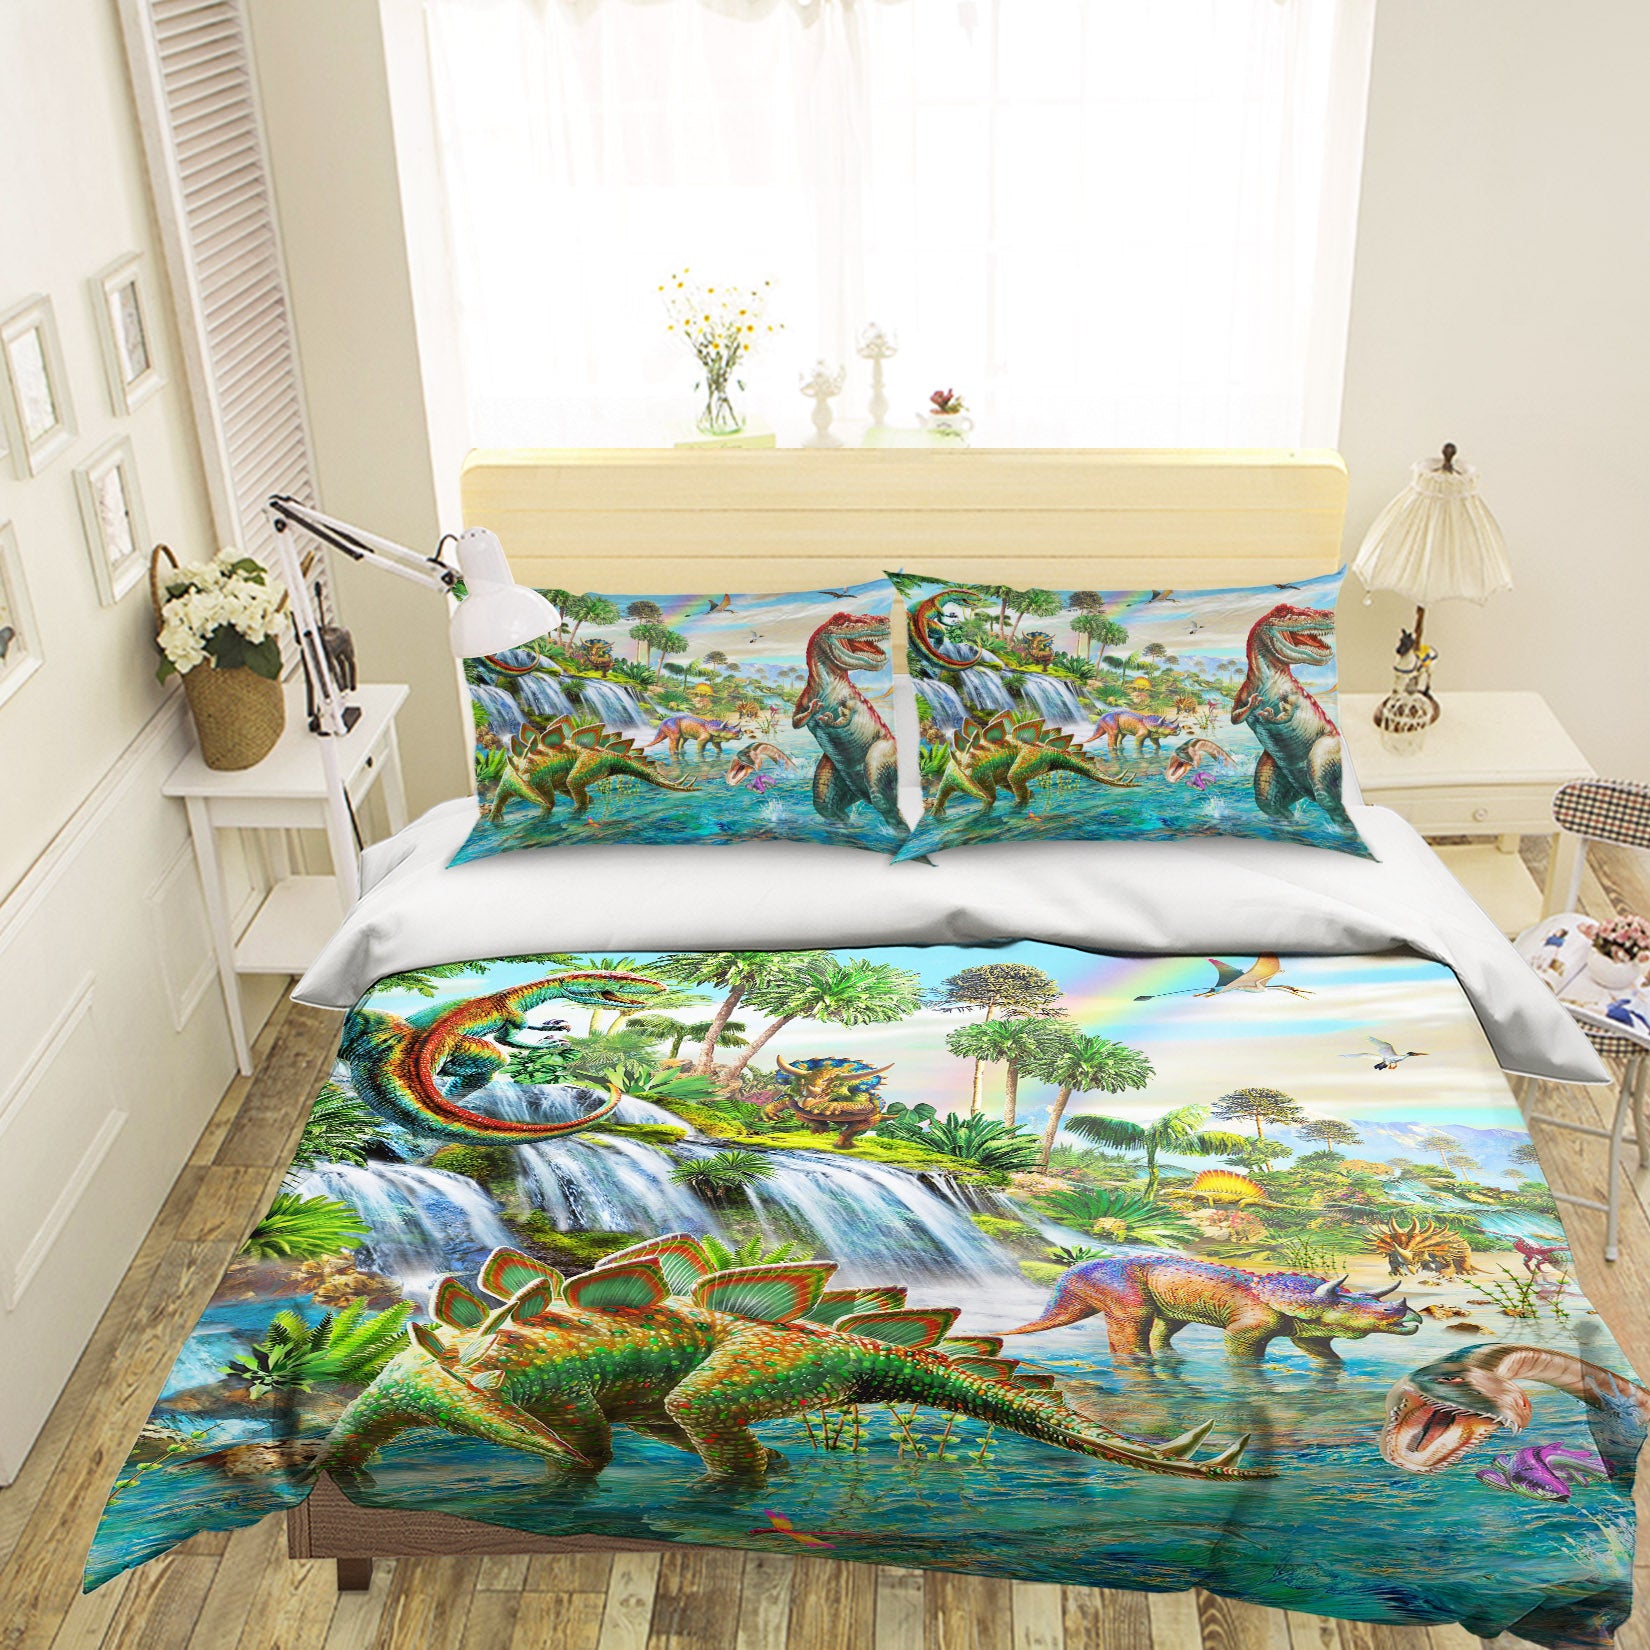 3D Dinosaur Falls 2123 Adrian Chesterman Bedding Bed Pillowcases Quilt